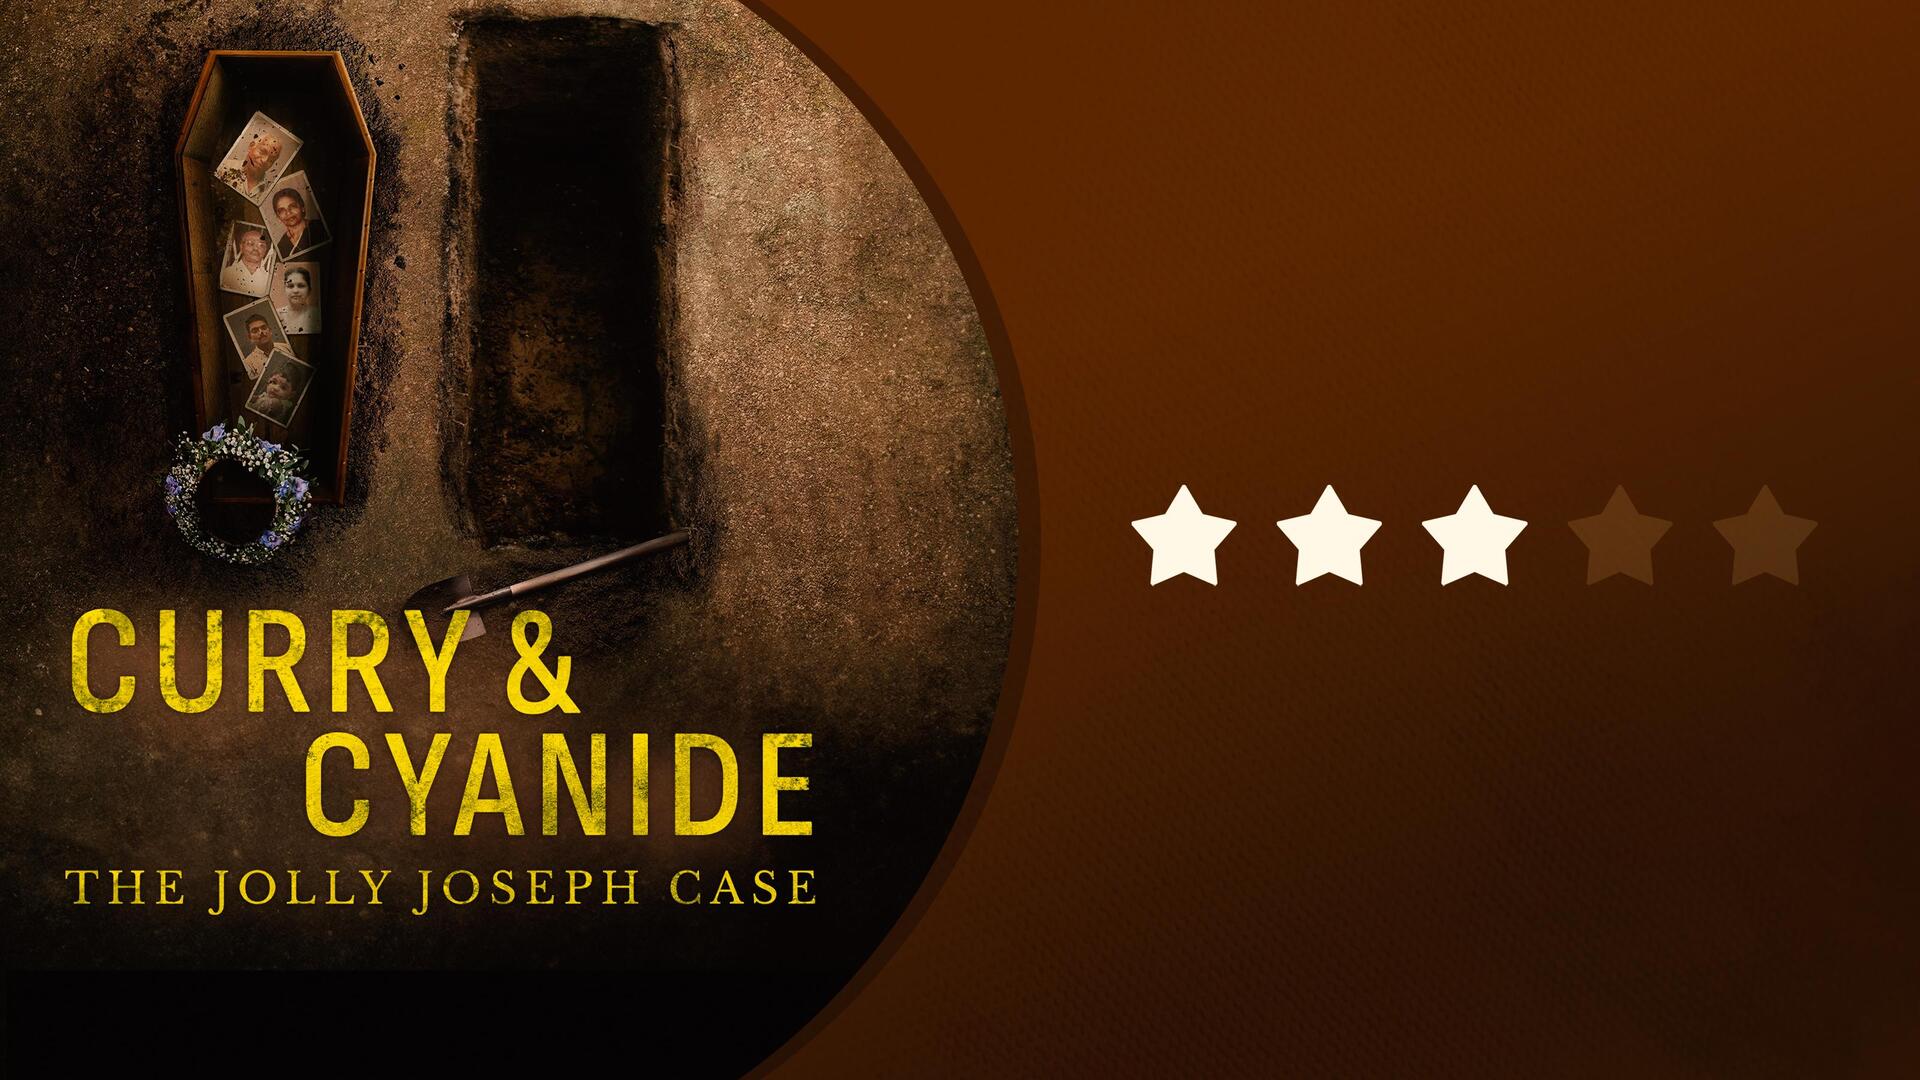 'Curry & Cyanide' review: Gripping tale of Koodathai cyanide killings